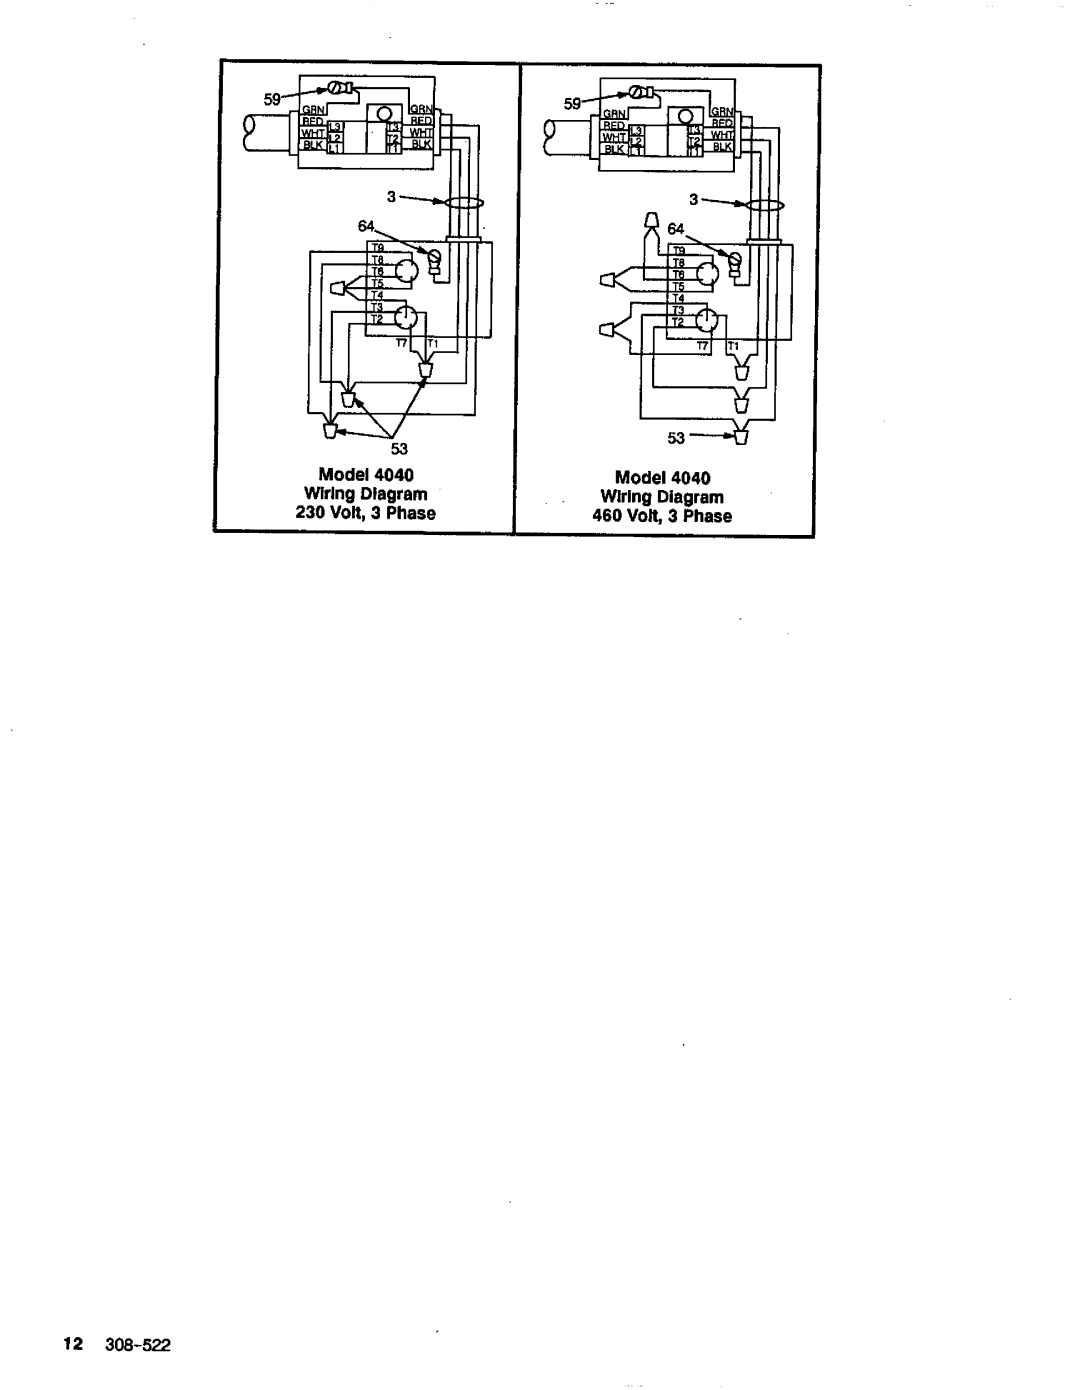 Graco Inc 308-522, 800-345, 4040 manual Model, Wring Diagram, Volt, 3 Phase, Volt. 3 Phase 